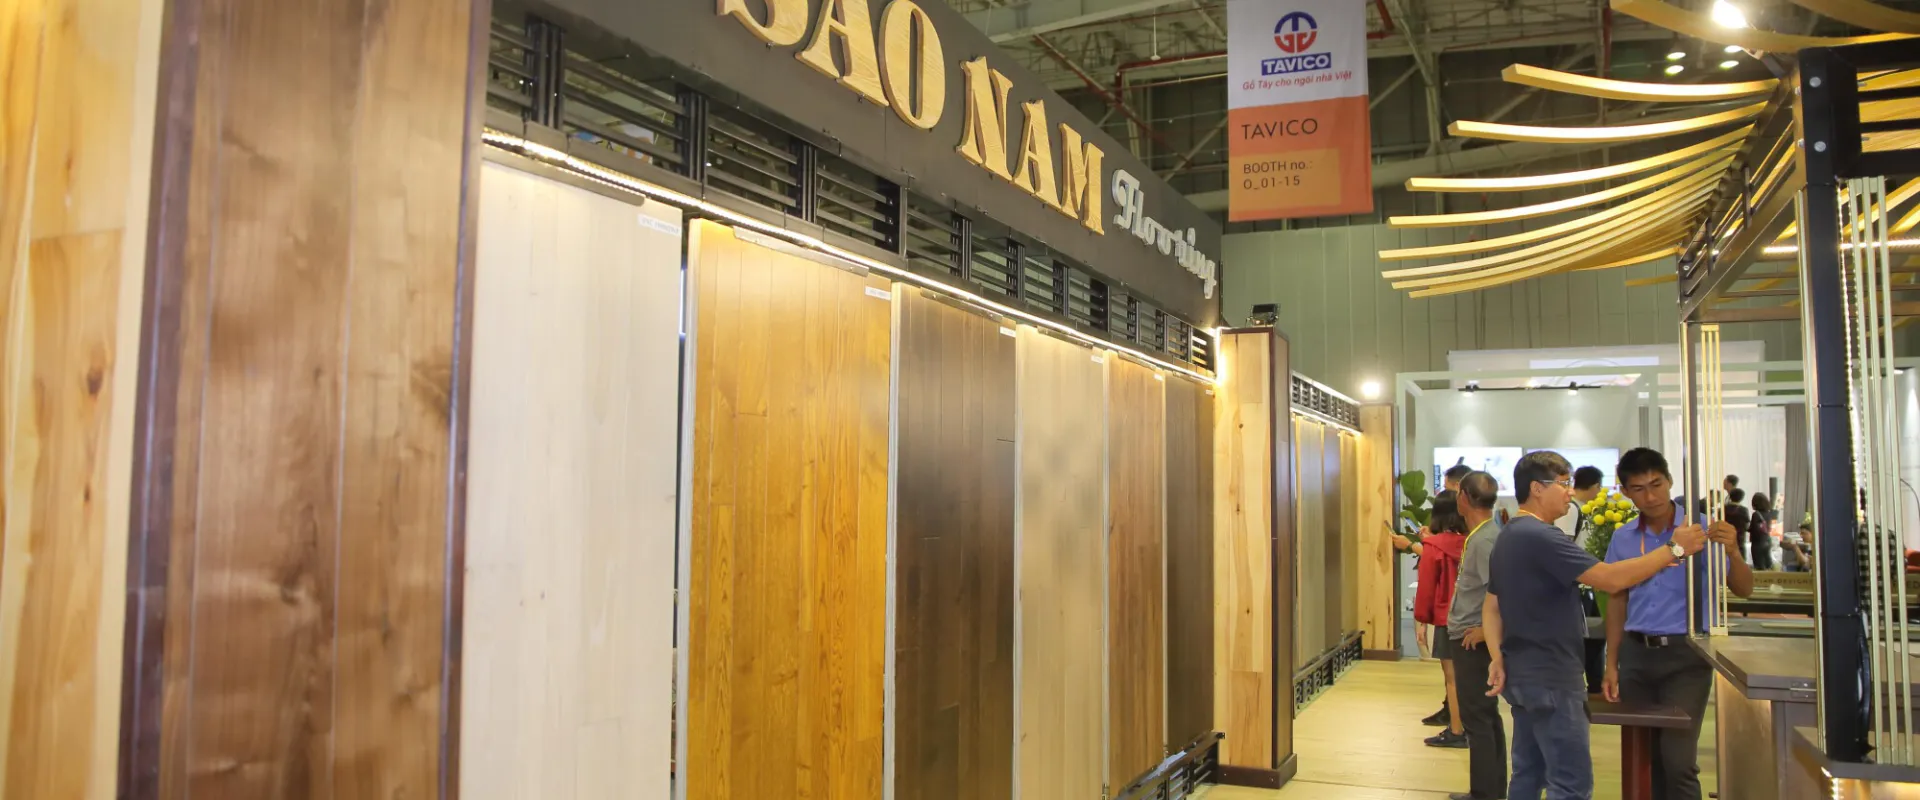 Sao Nam Flooring | Showroom